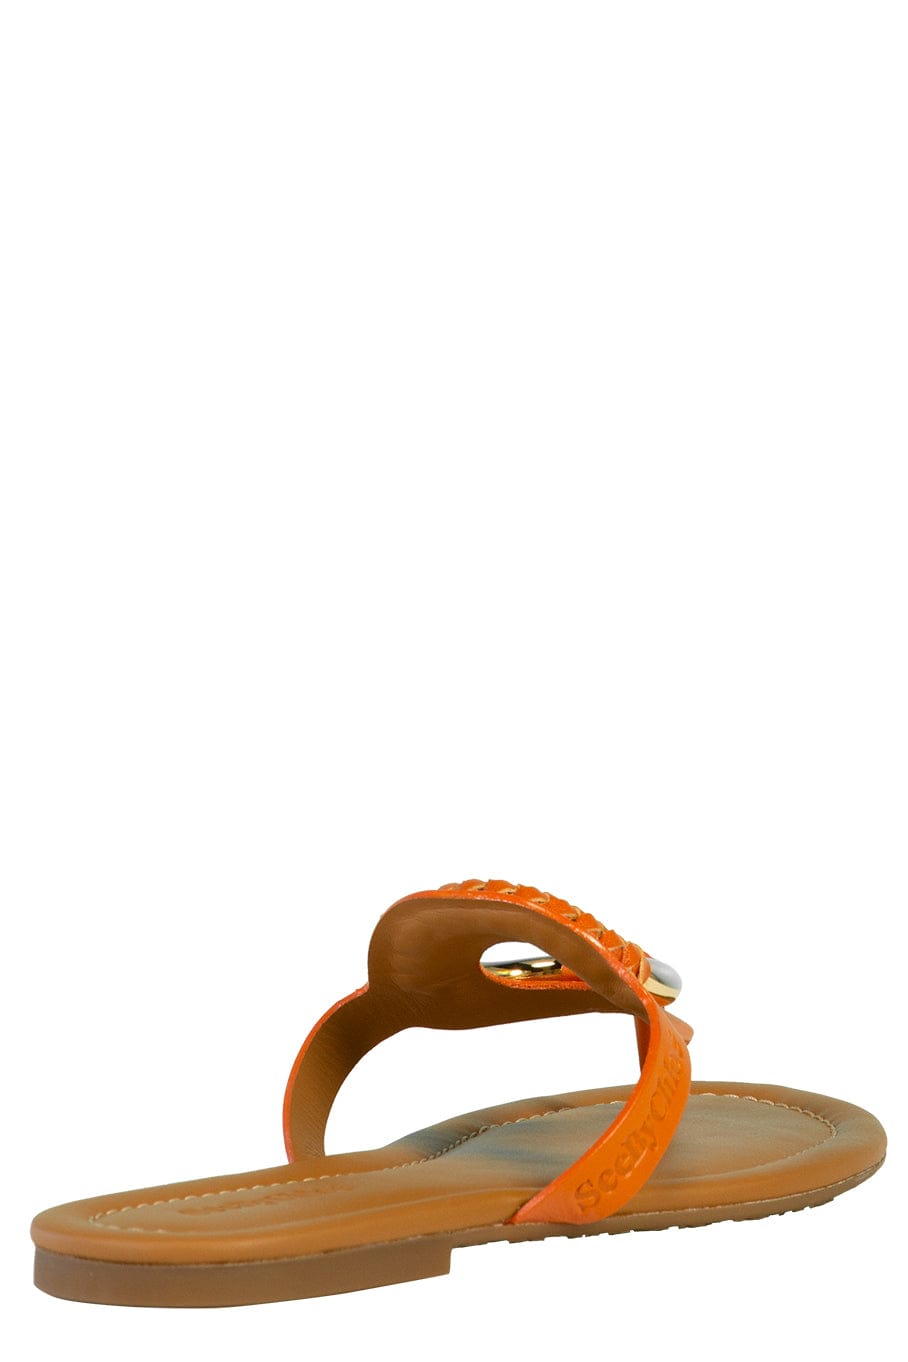 SEE by CHLOE-Hana Leather Ring Sandal - Orange-